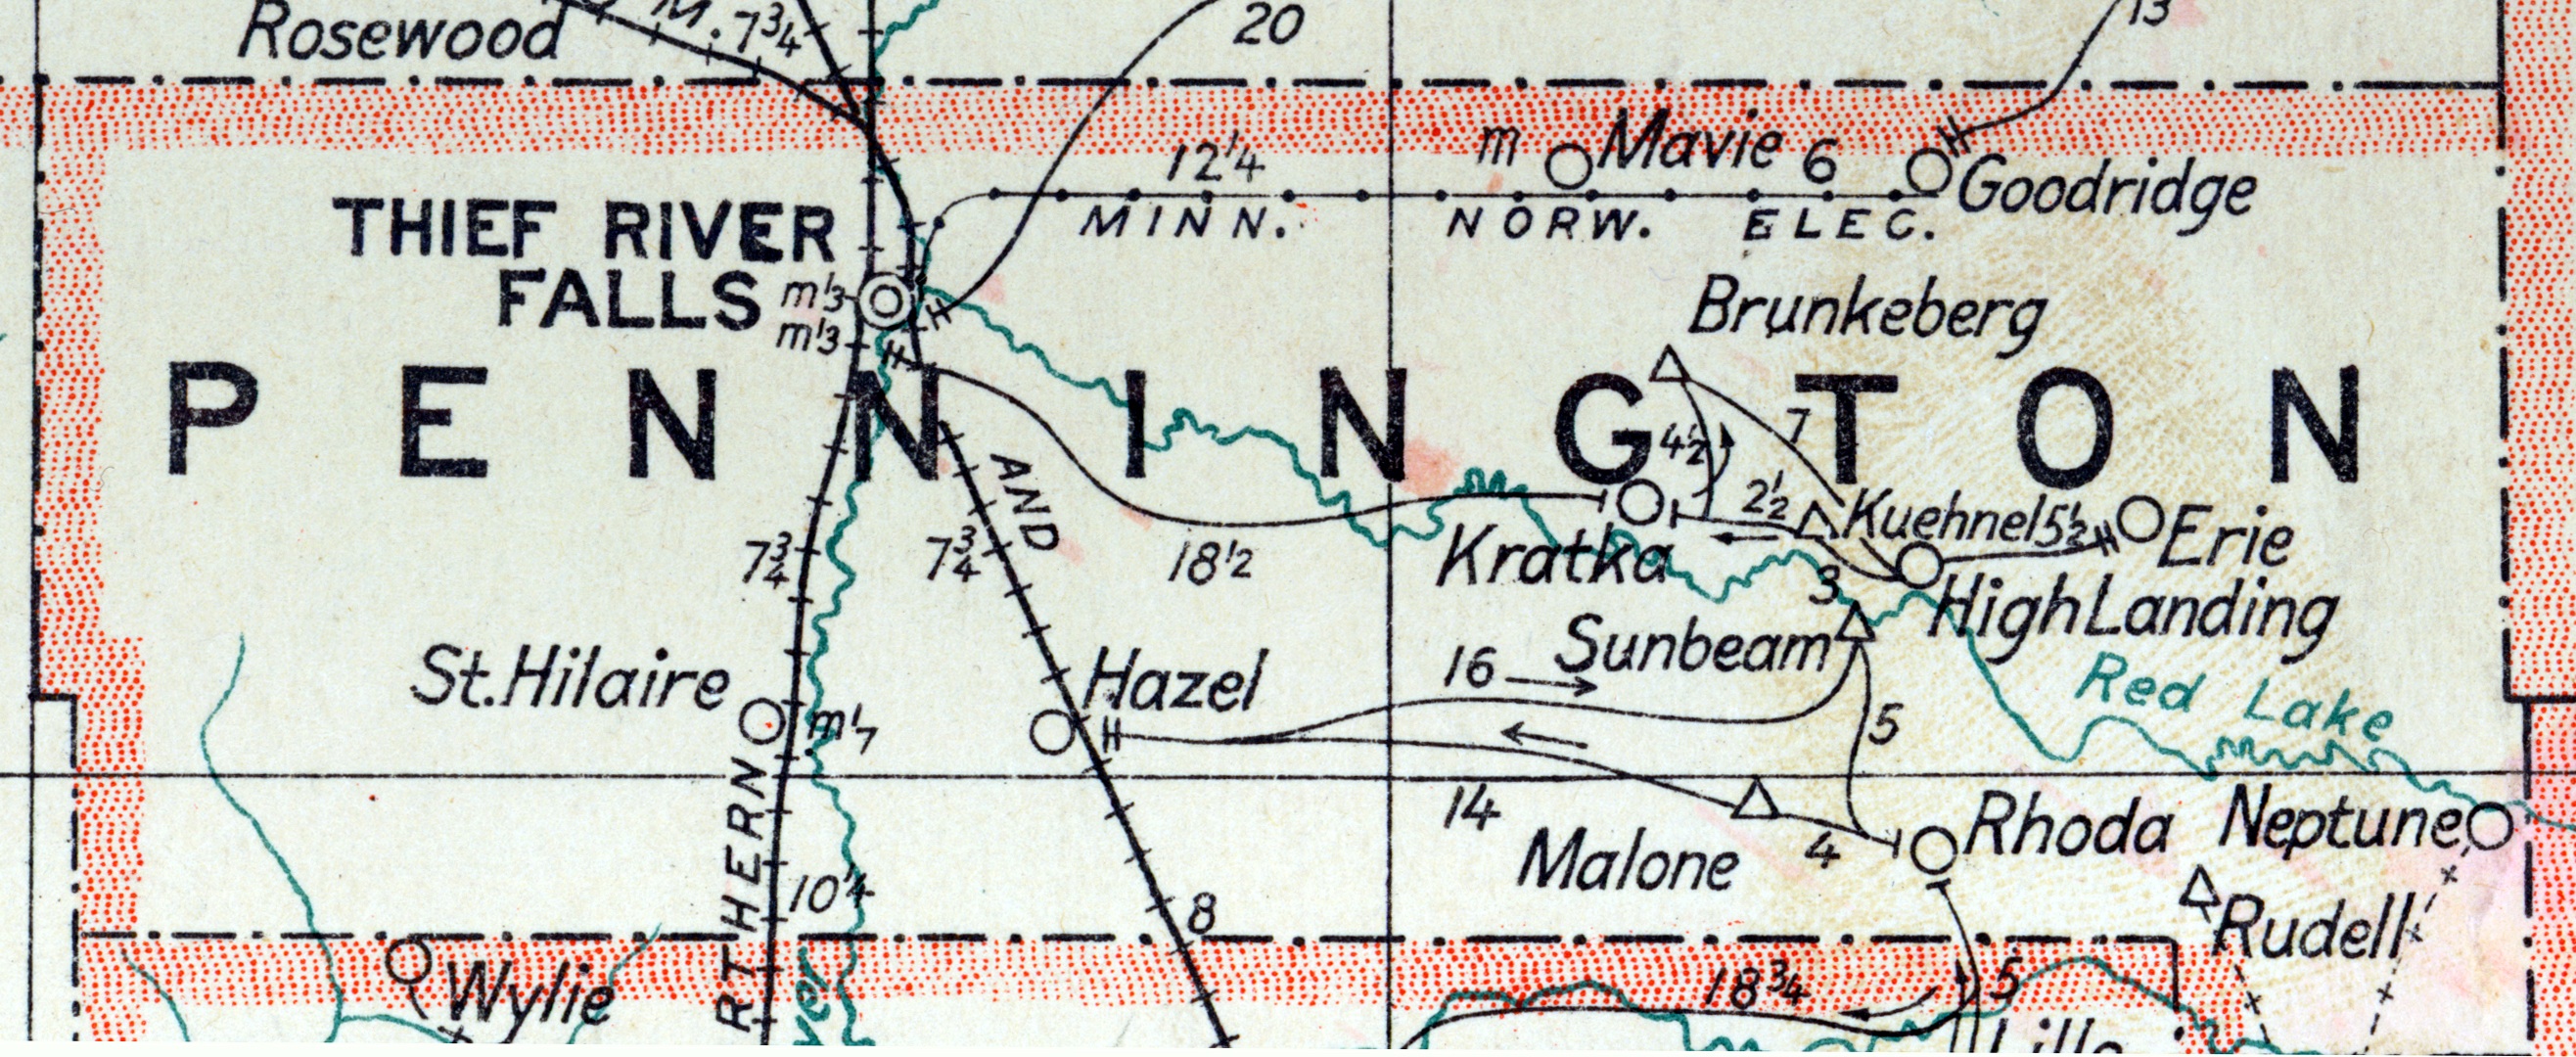 Pennington County Mn Gis File:pennington County (Mn) Postal And Railroad Map.jpg - Wikipedia